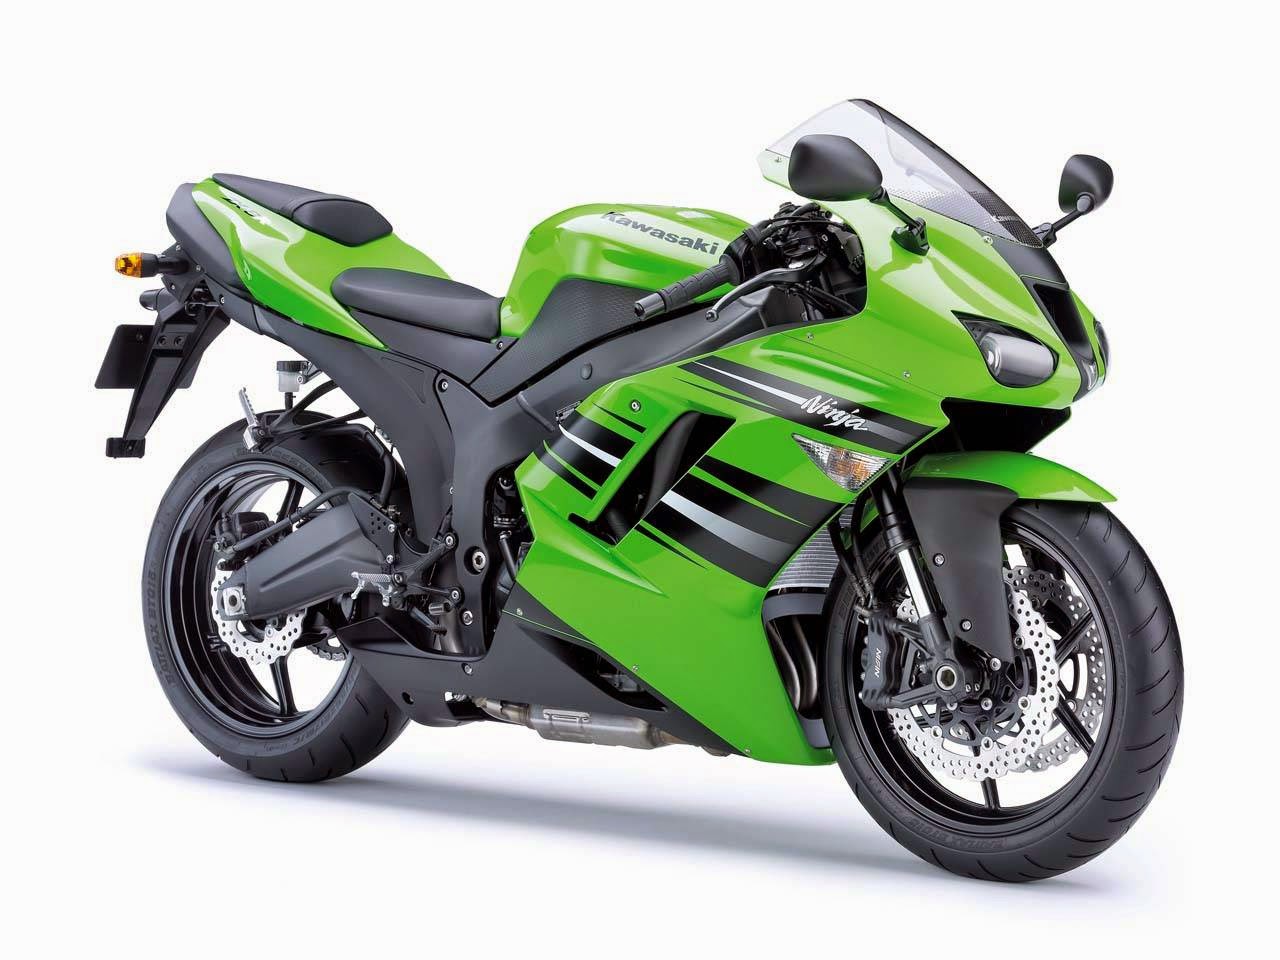 100 Gambar Motor Ninja Kawasaki Terbaru 2015 Terkeren Obeng Motor